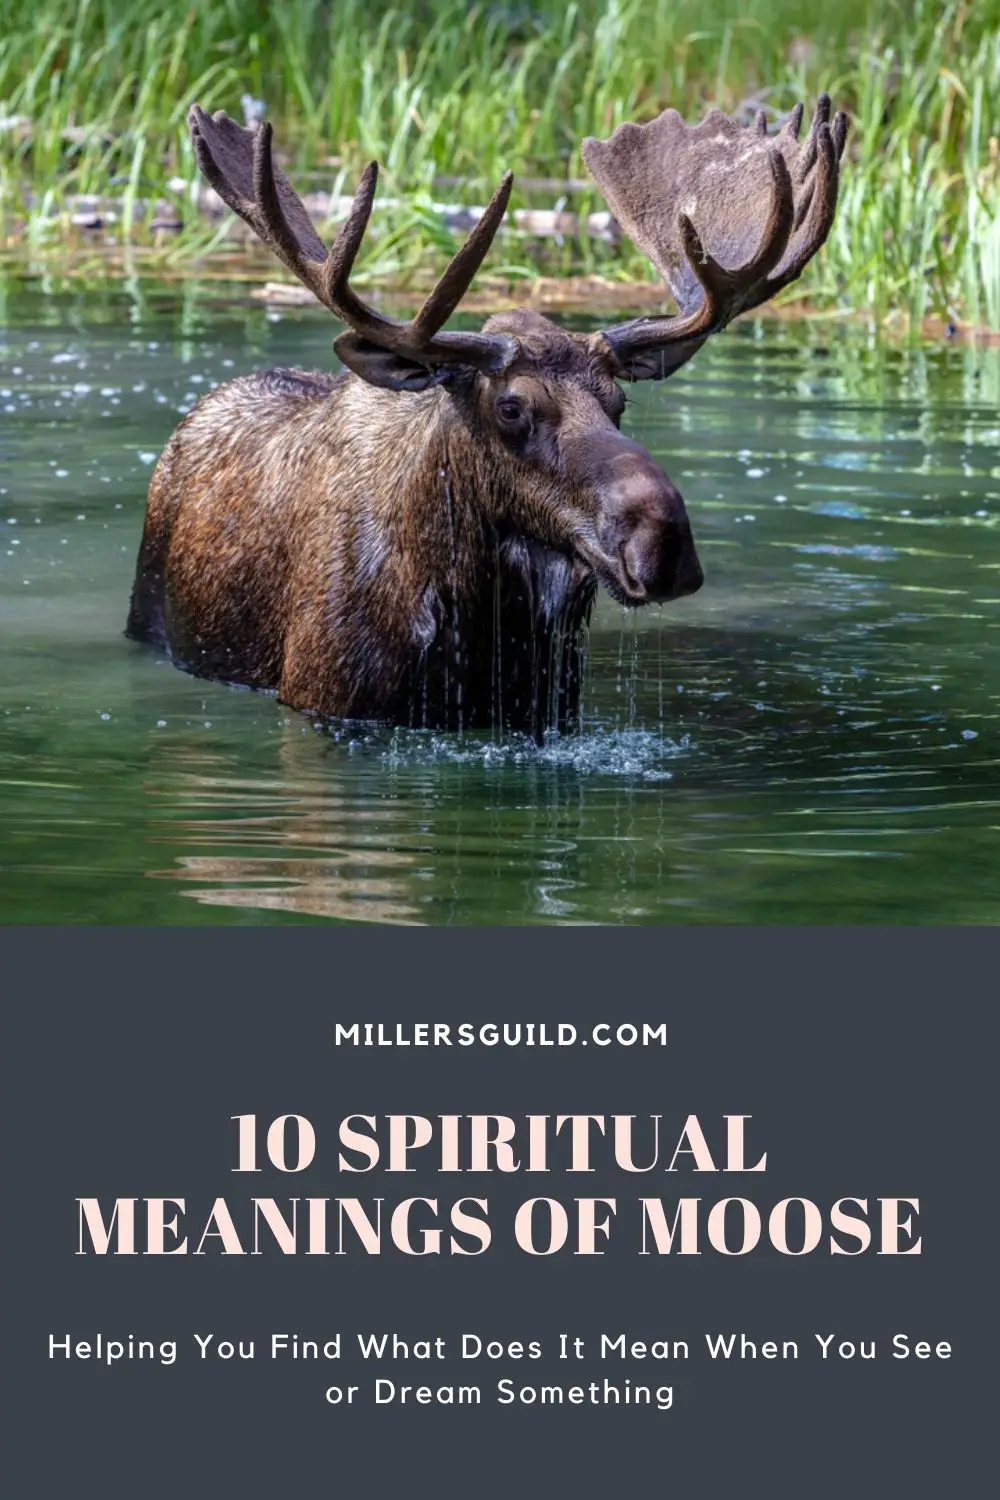 1 Moose As A Symbol Of Fertility